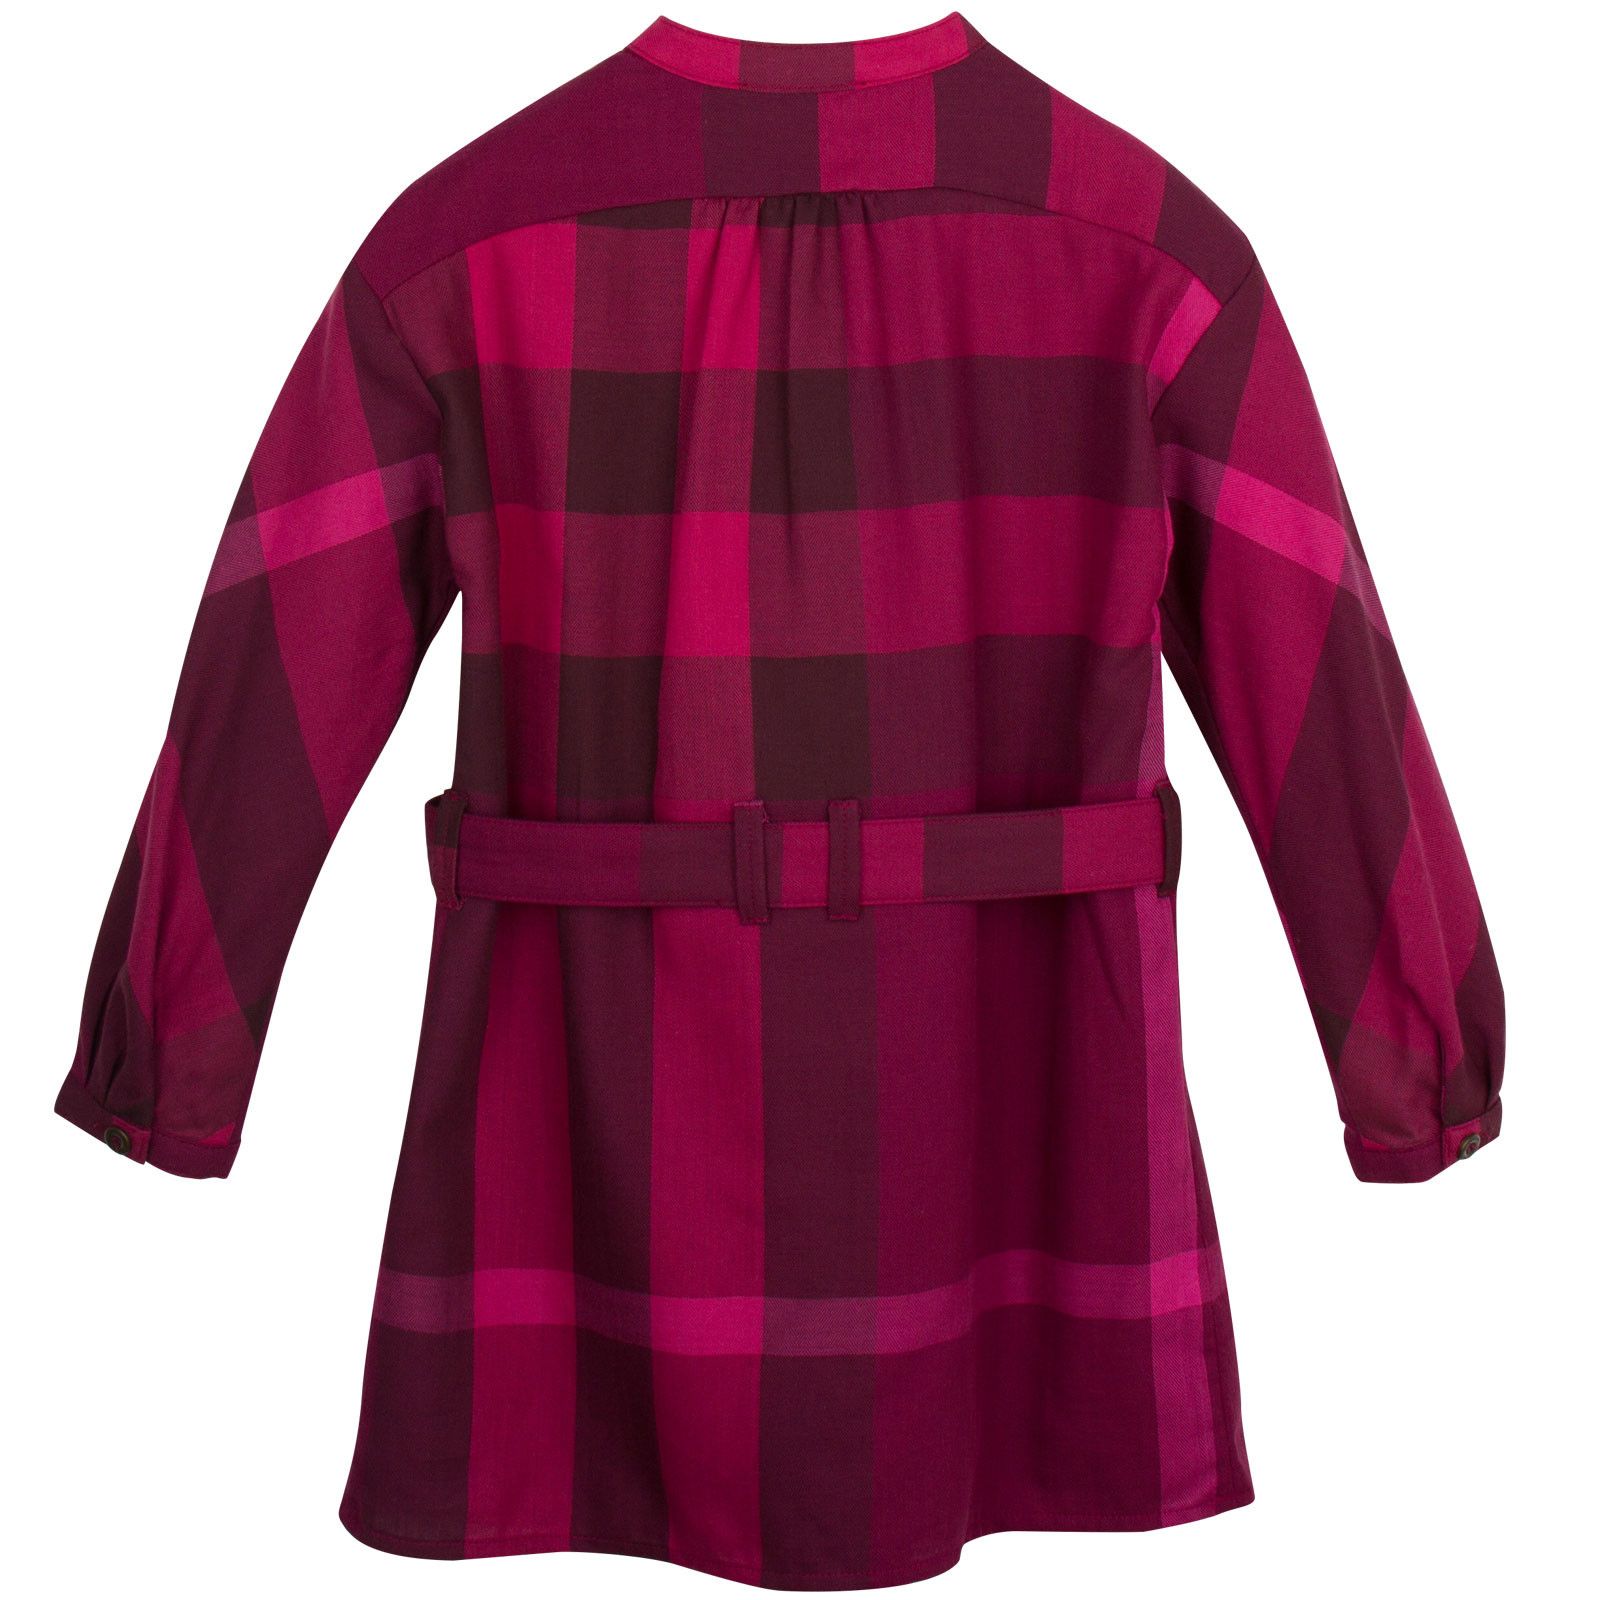 Girls Dark Pink Cotton Check Dress With Bow Belt - CÉMAROSE | Children's Fashion Store - 2